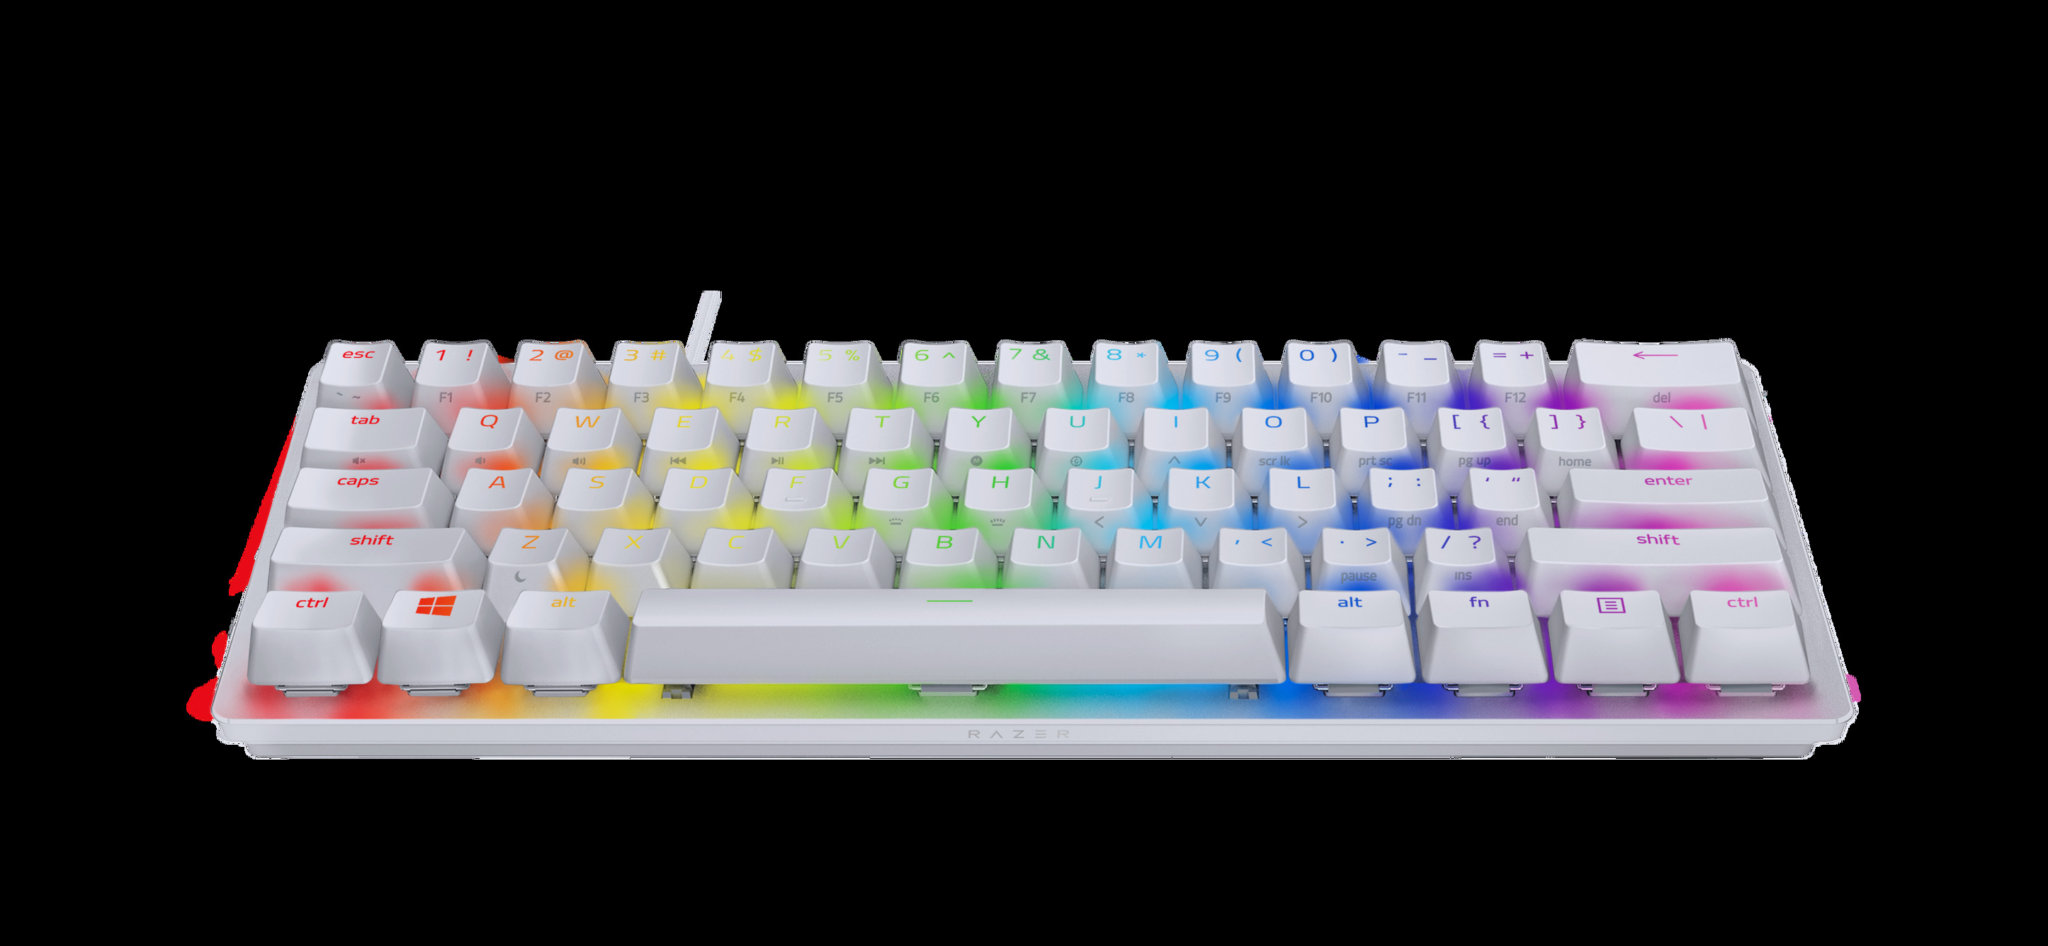 The ultra compact Razer Huntsman Mini is their first 60% keyboard